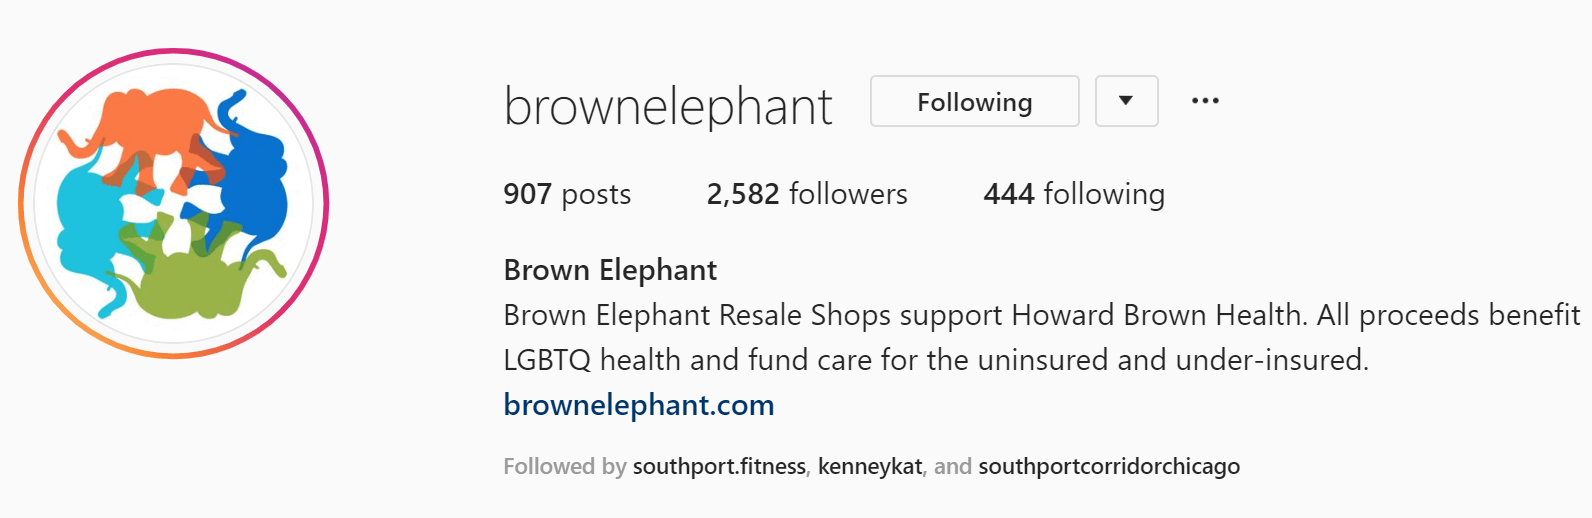 brown elephant - best Instagram bio